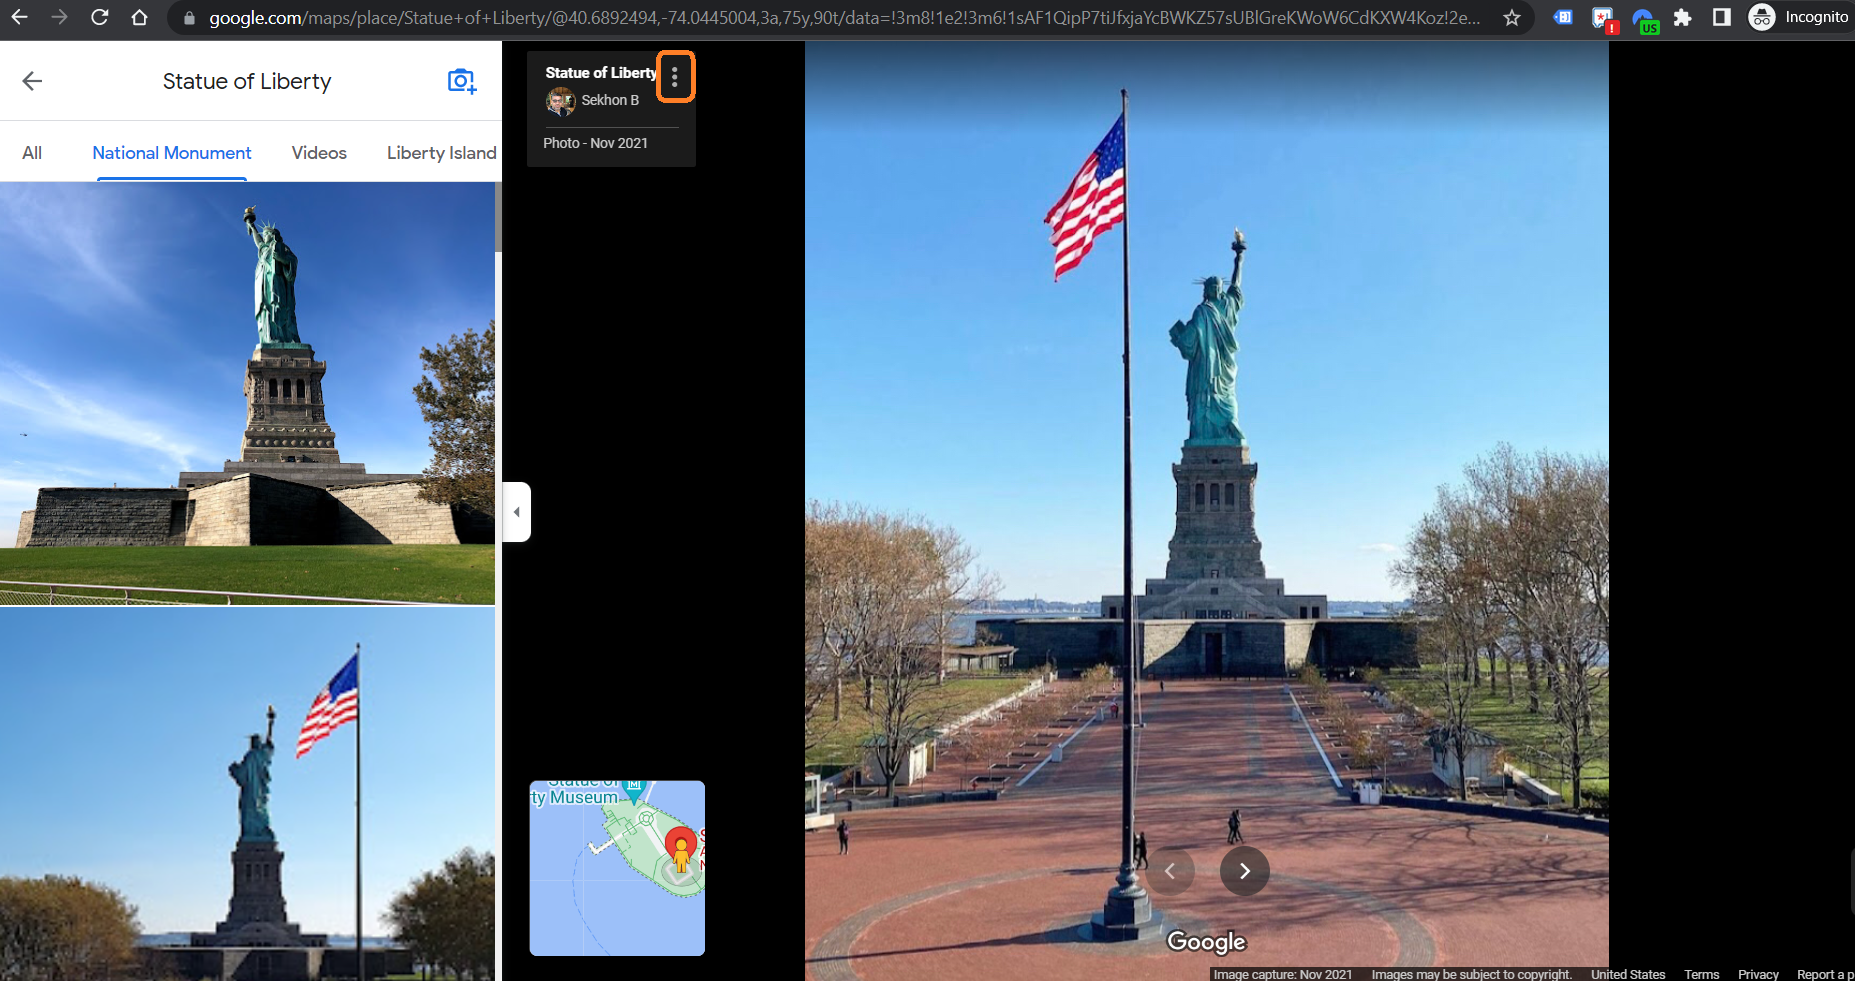 Statue of Liberty Google Maps Image